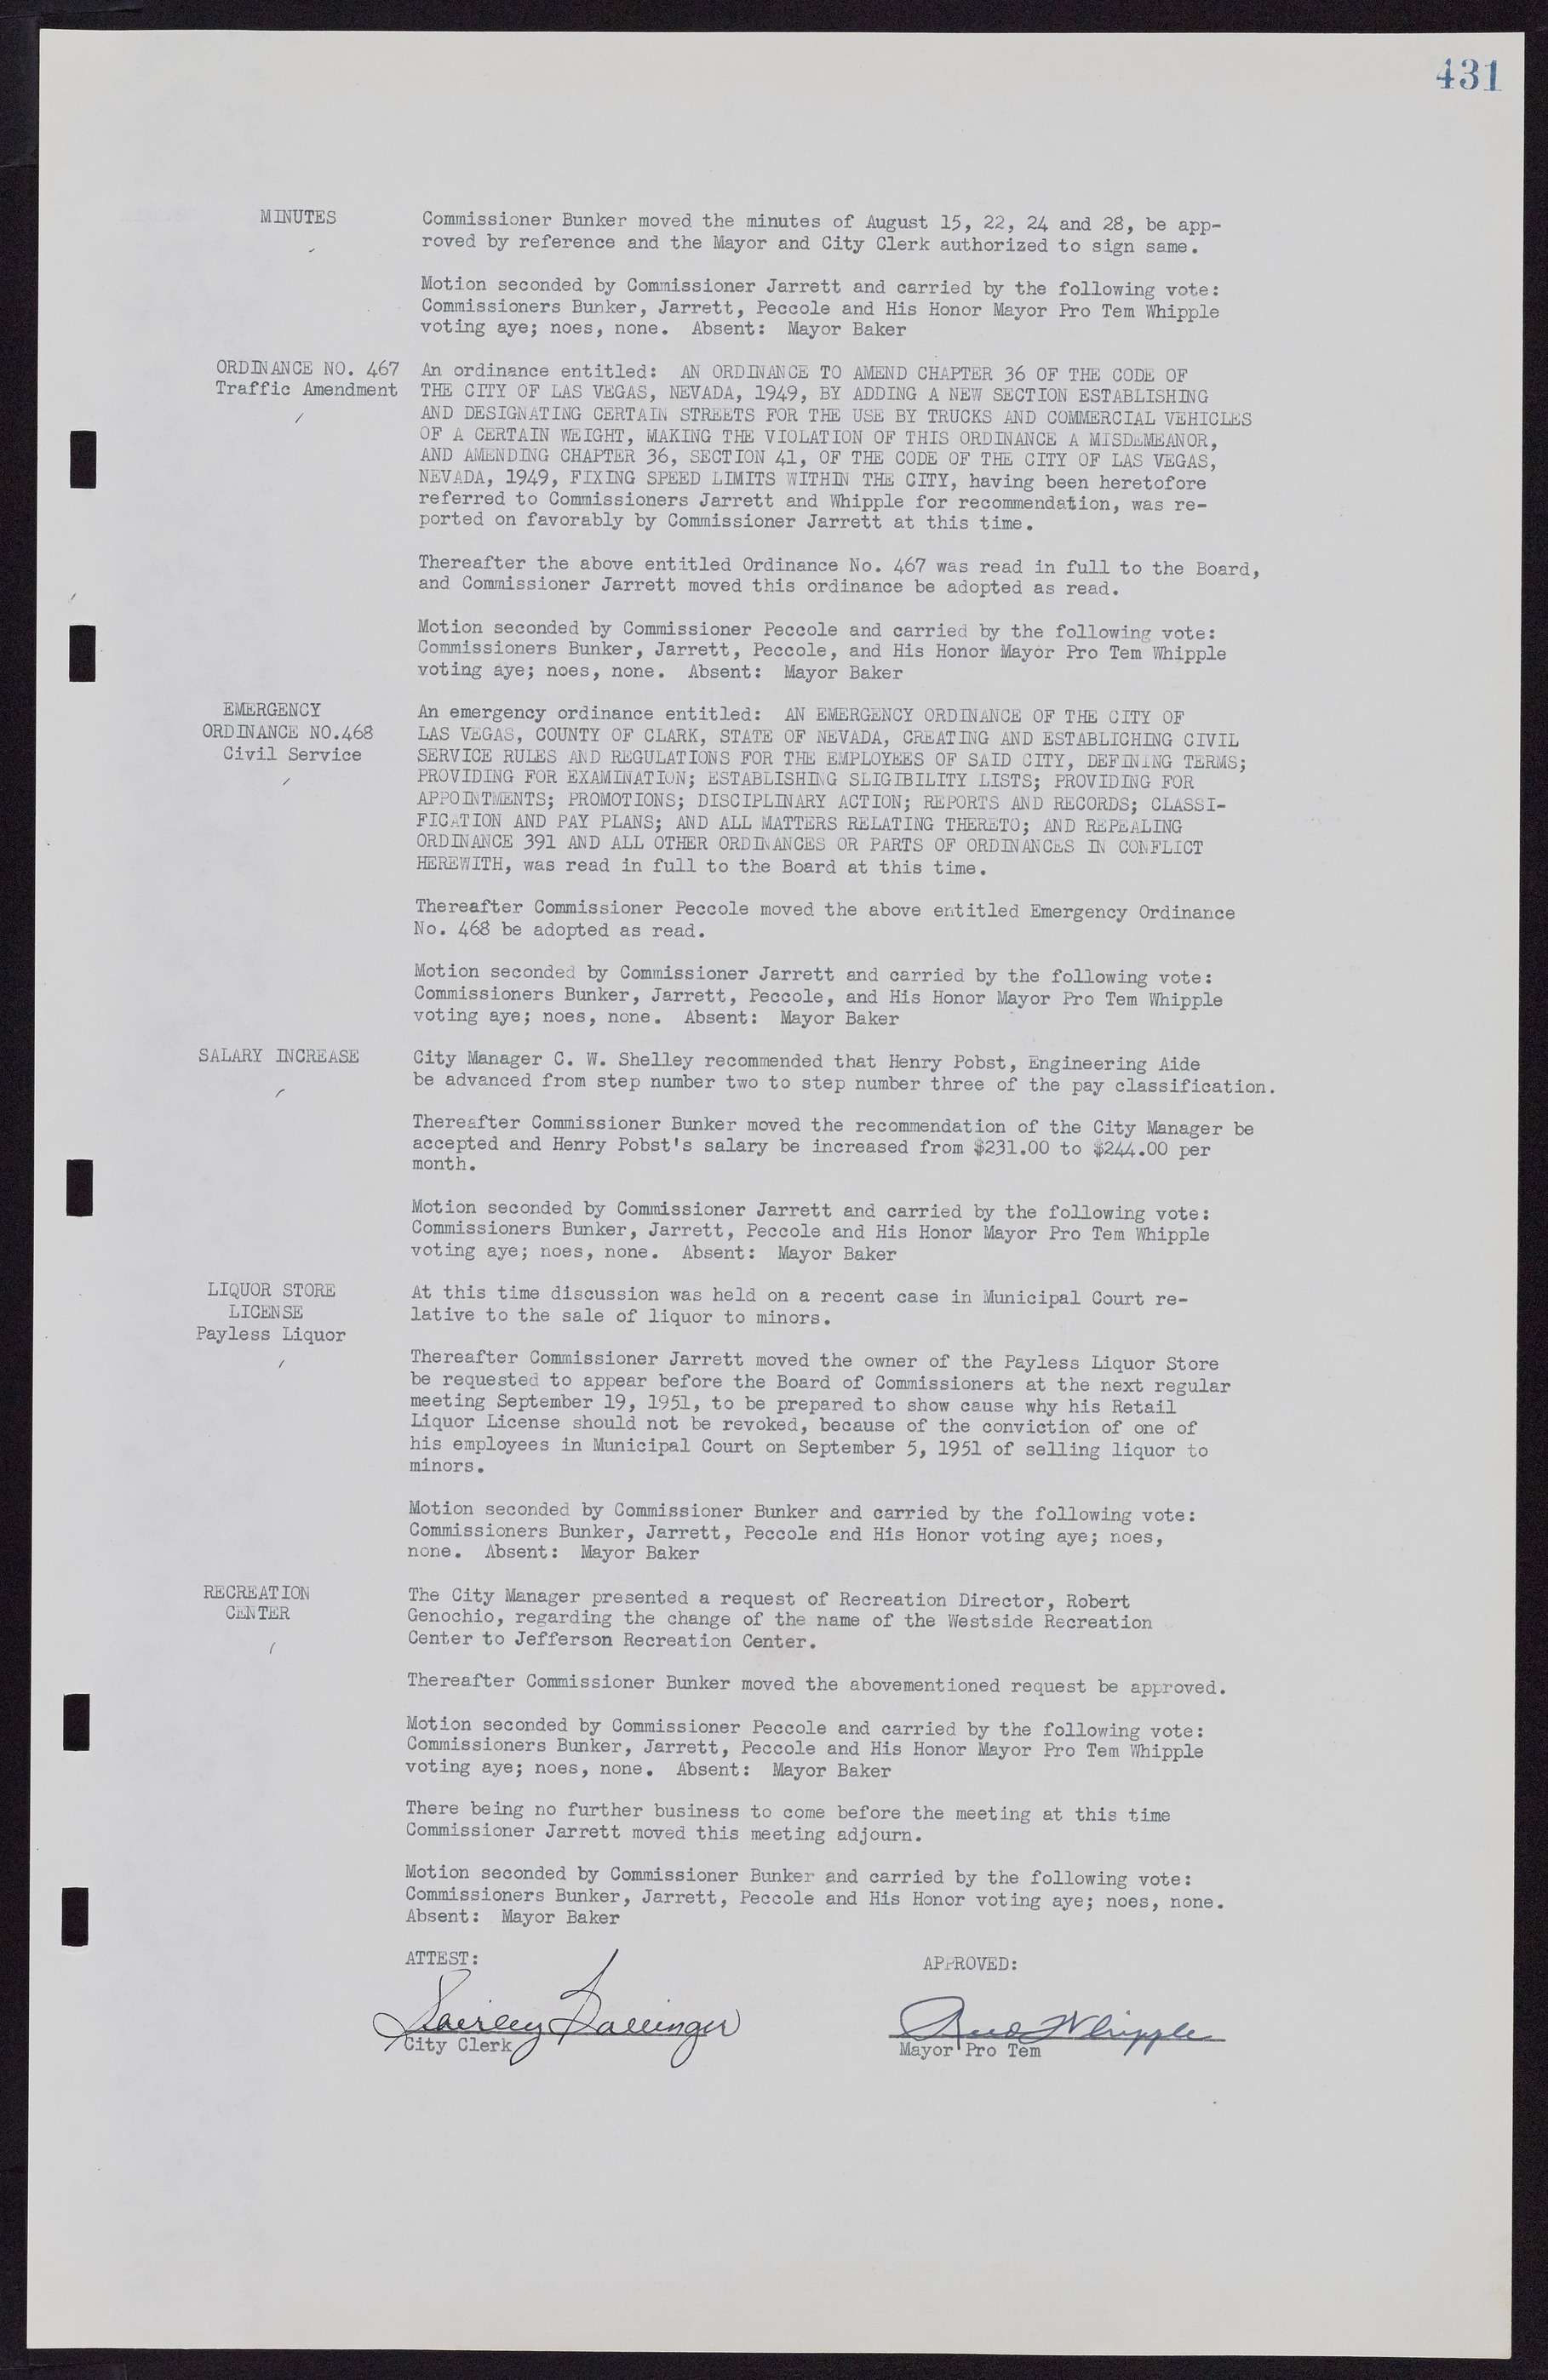 Las Vegas City Commission Minutes, November 7, 1949 to May 21, 1952, lvc000007-447